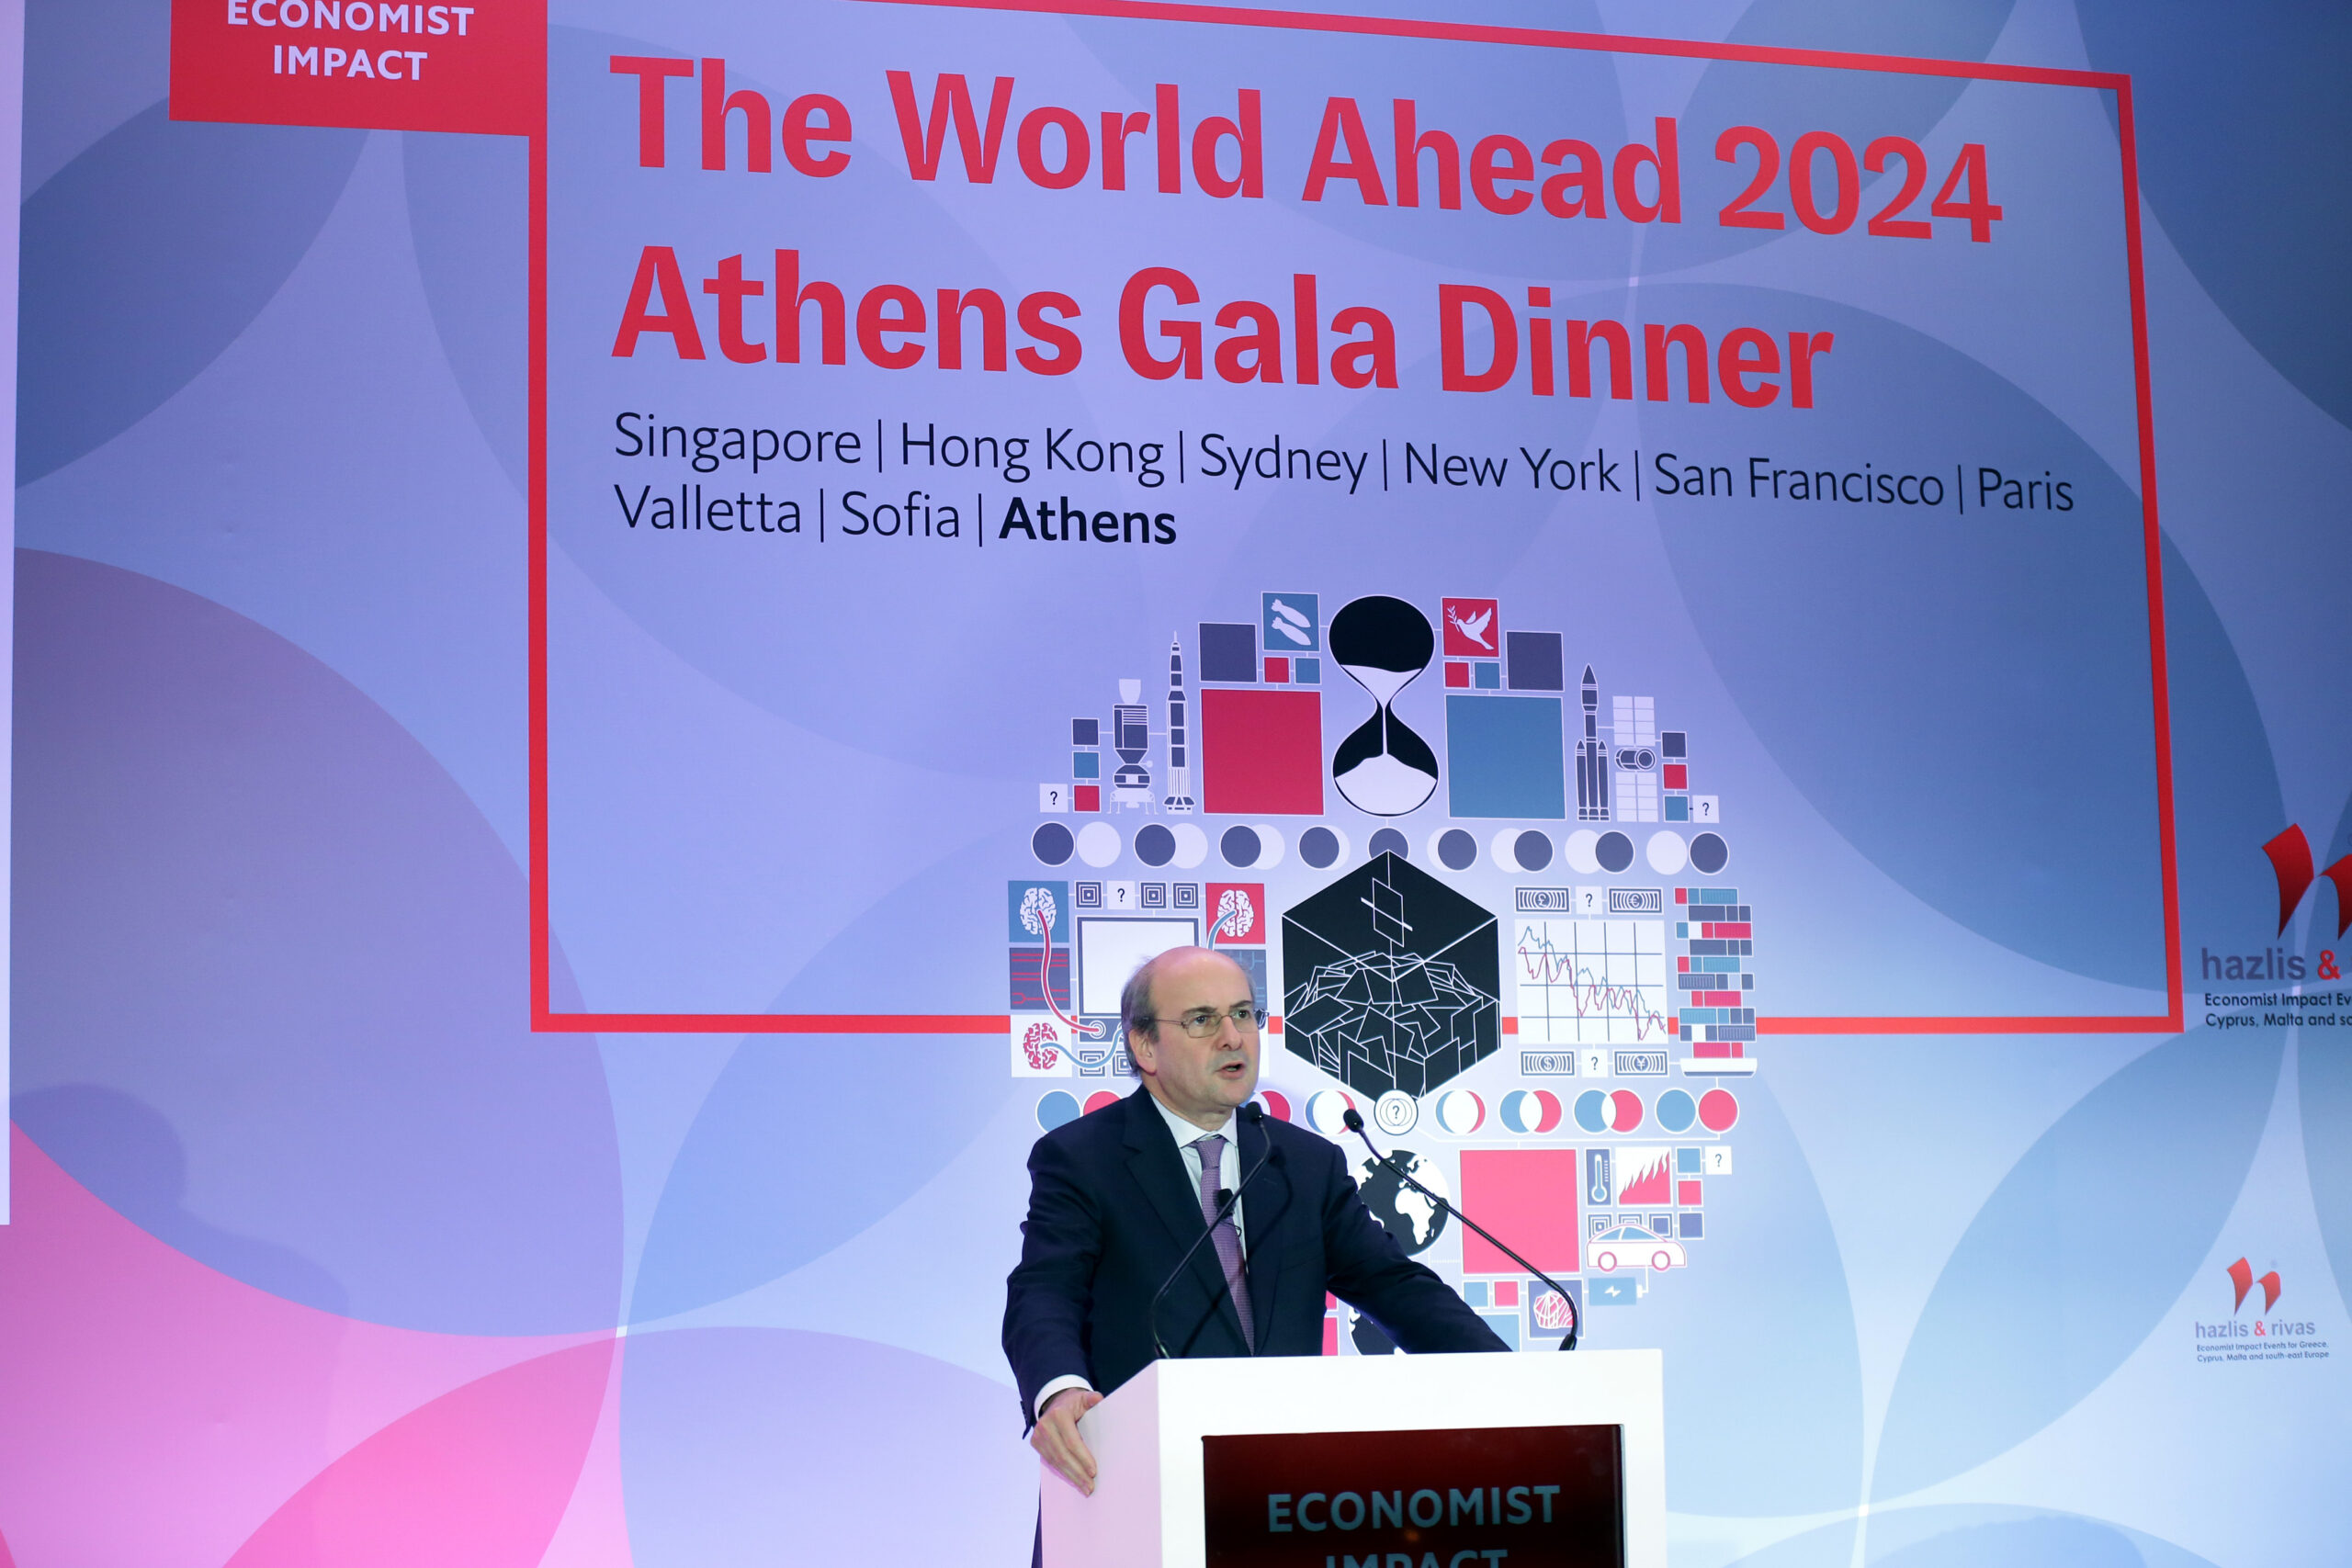 THE WORLD AHEAD 2024: ATHENS GALA DINNER - ECONOMIST IMPACT